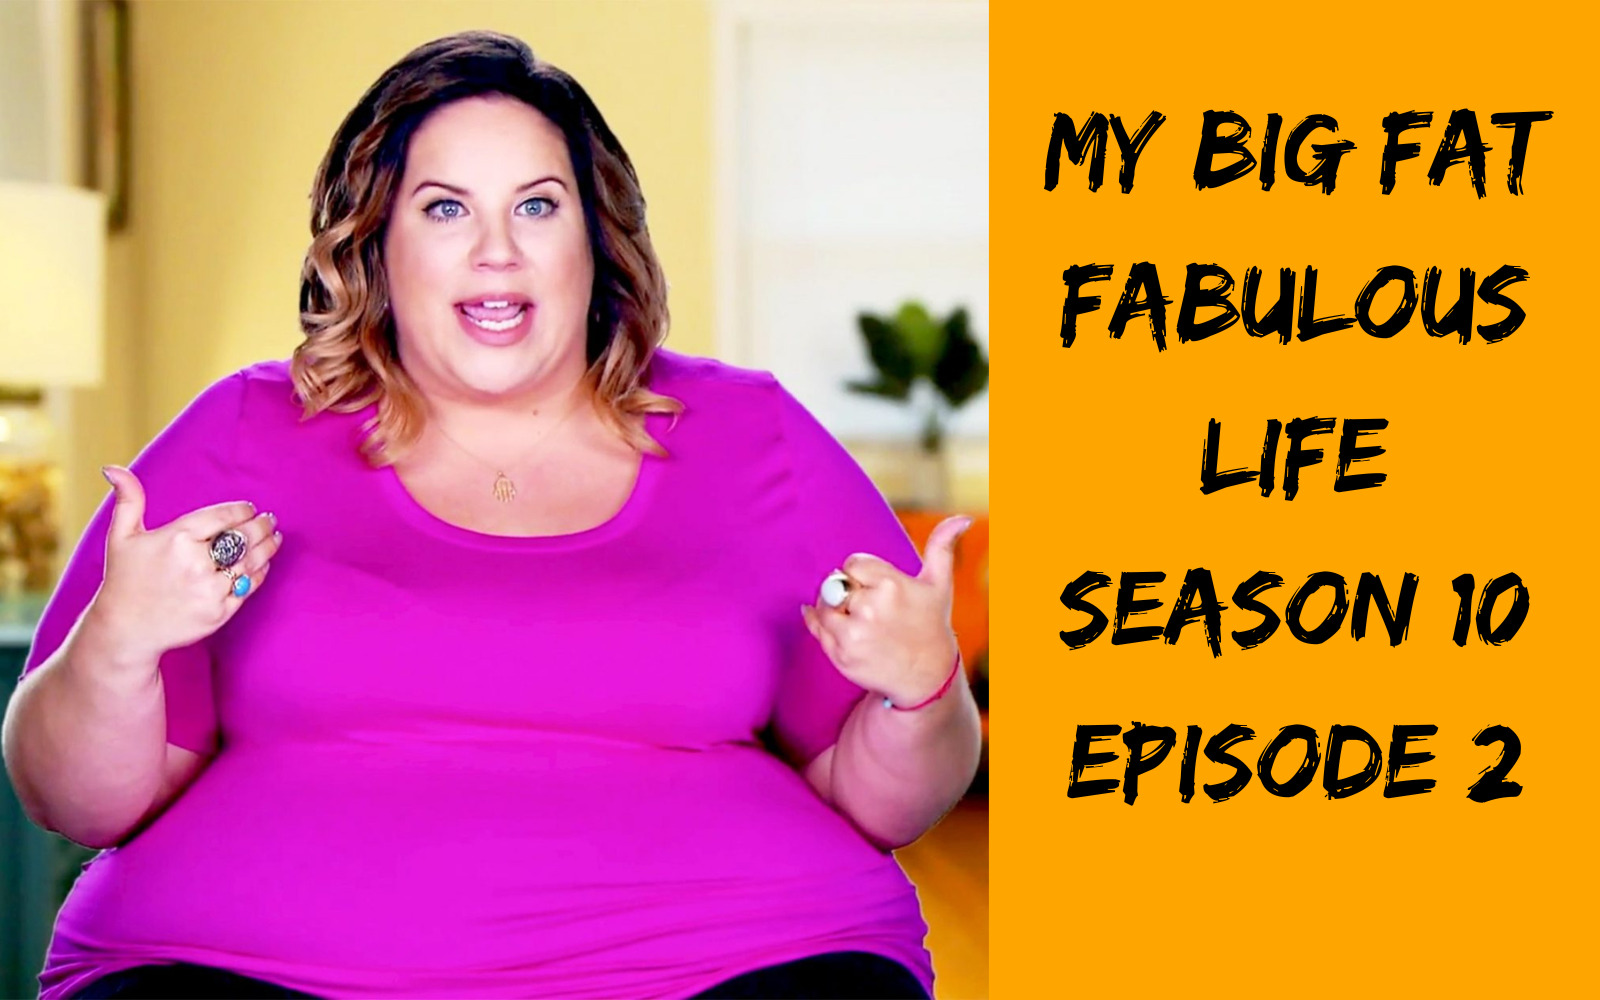 My Big Fat Fabulous Life Season 10 Episode 2 release date